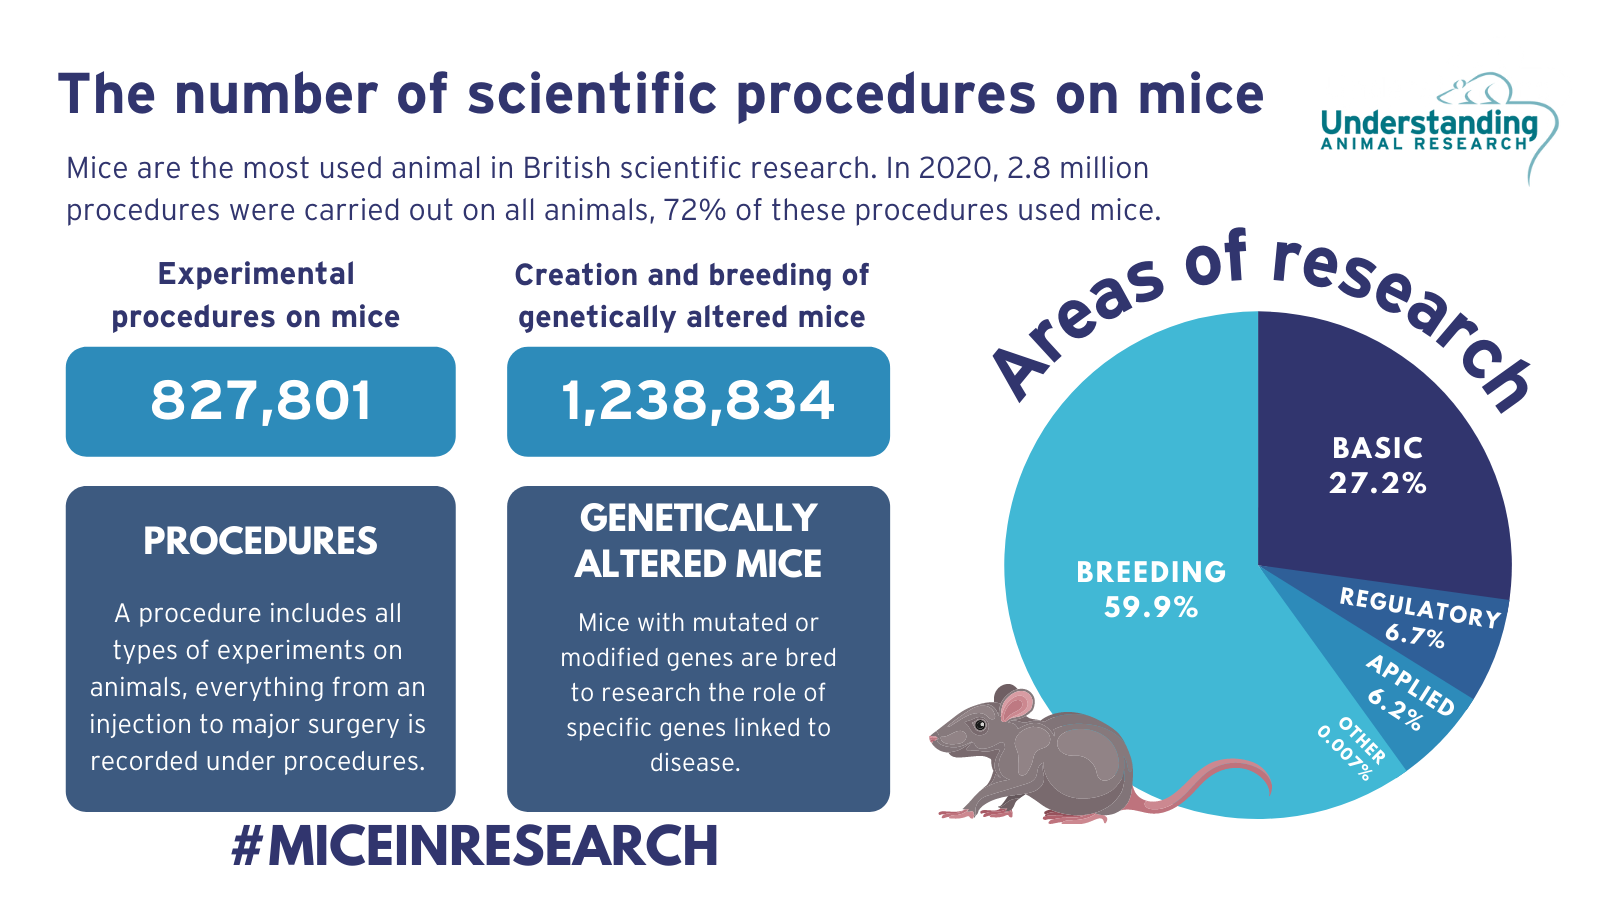 Mice in research statistics for Great Britain, 2020 (procedure purpose)